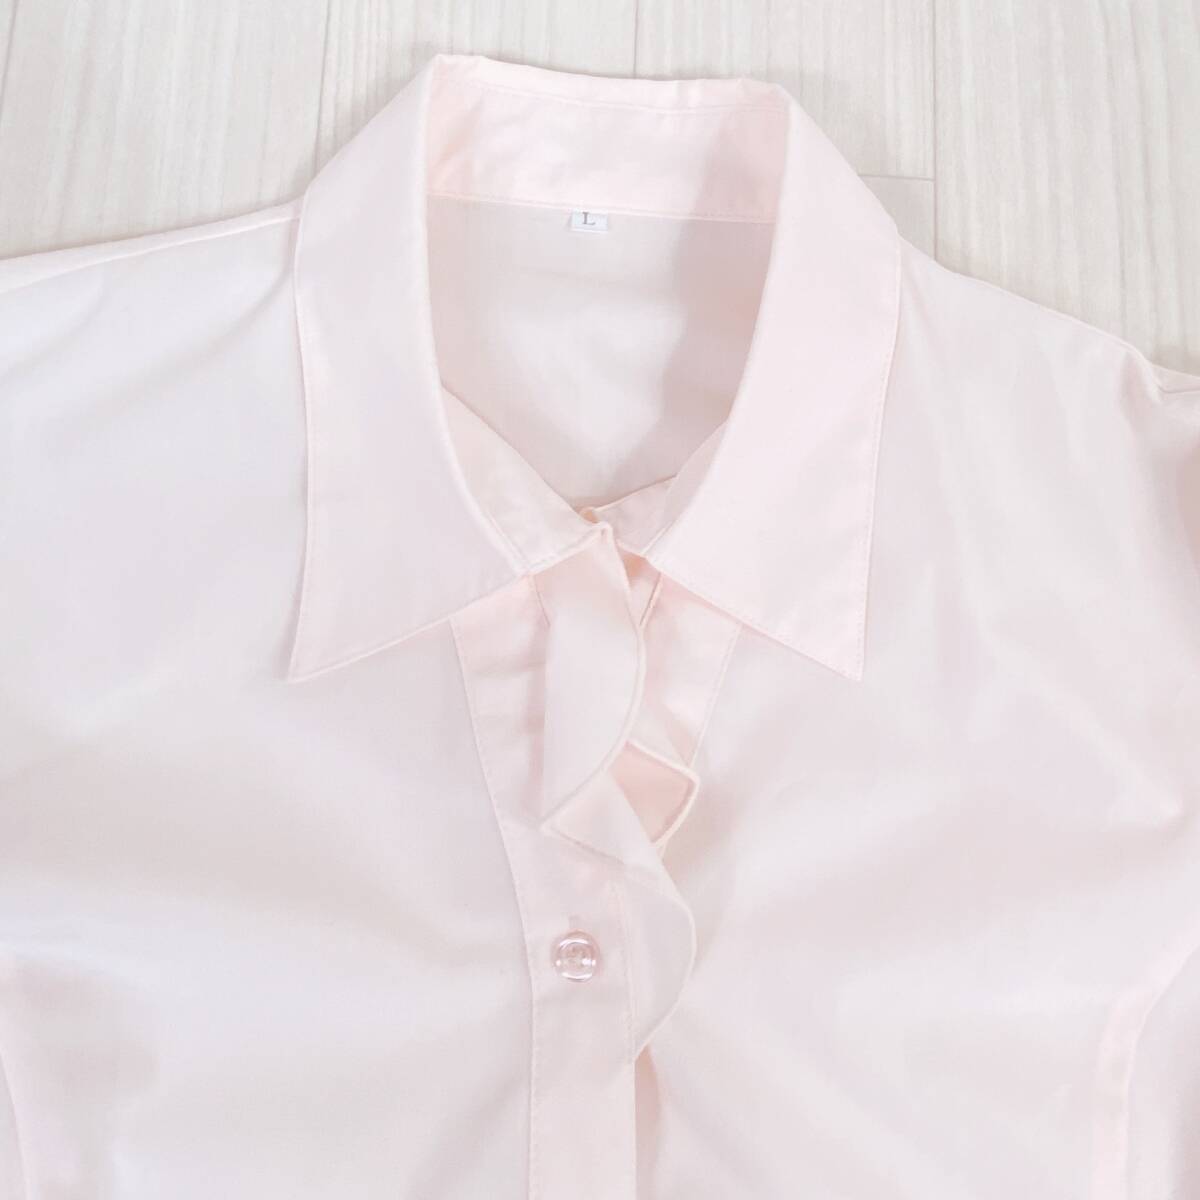 Z1186 美品 レディース 長袖 ワイシャツ ブラウス ライトピンク Lサイズ 万能 オフィススタイル スーツインナー かわいい シンプル USED_画像8